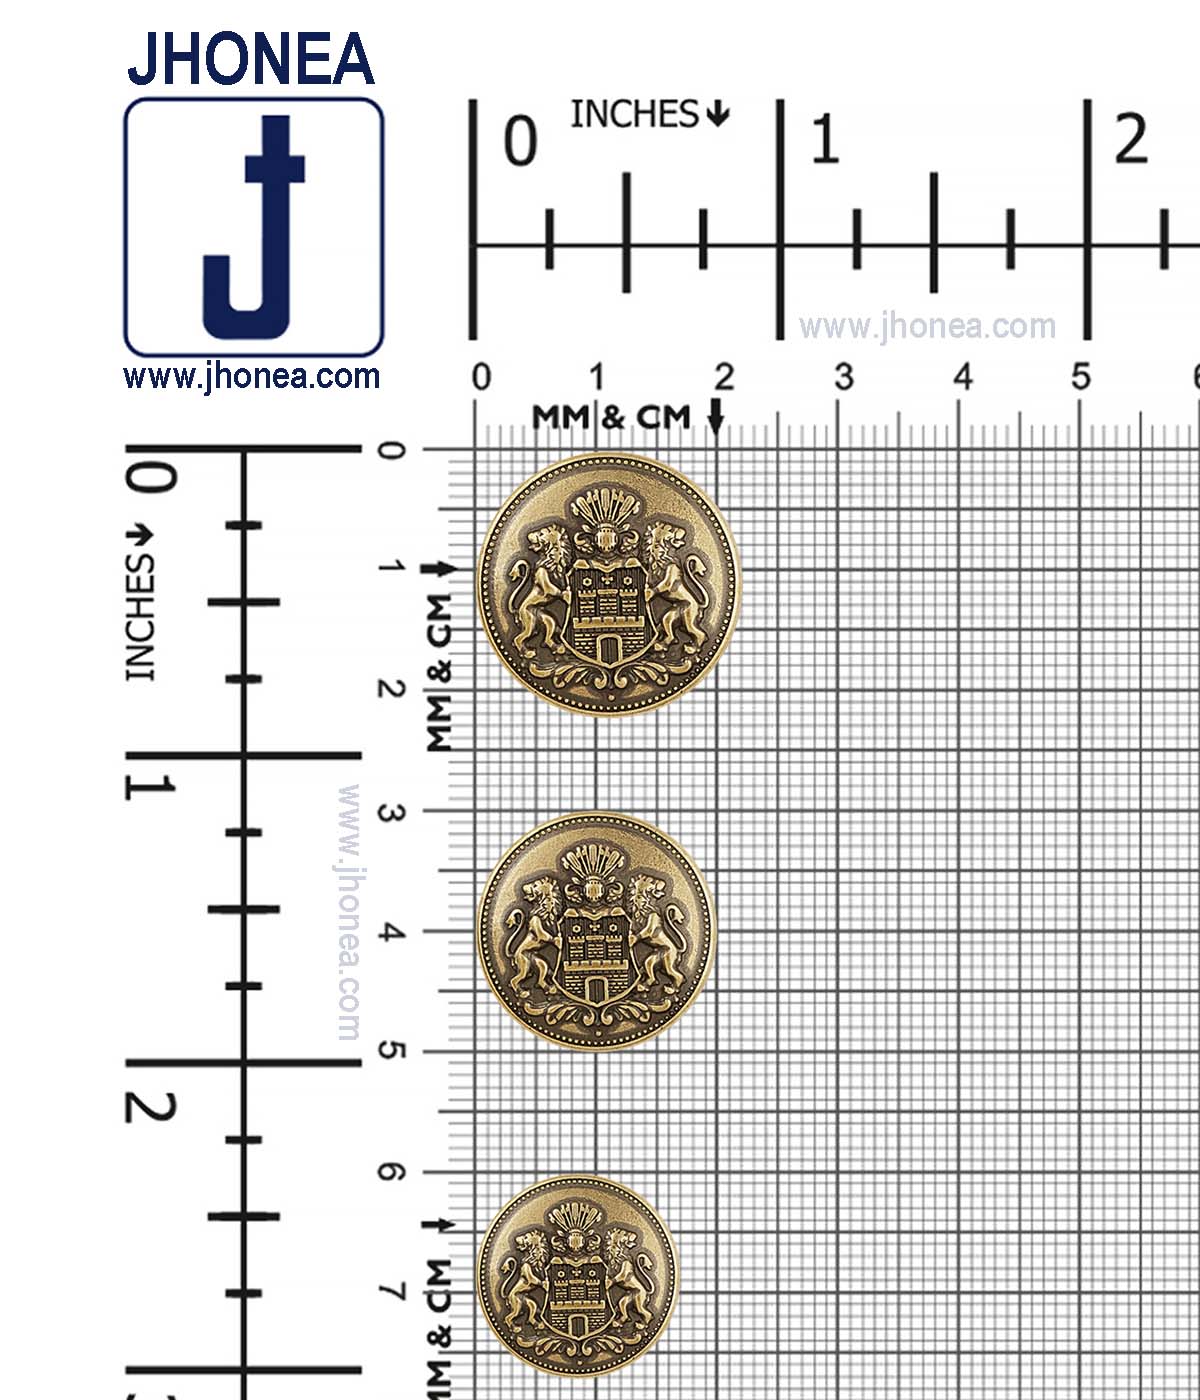 Lion Heraldic Coat of Arms Shield Crest Emblem Metal Buttons